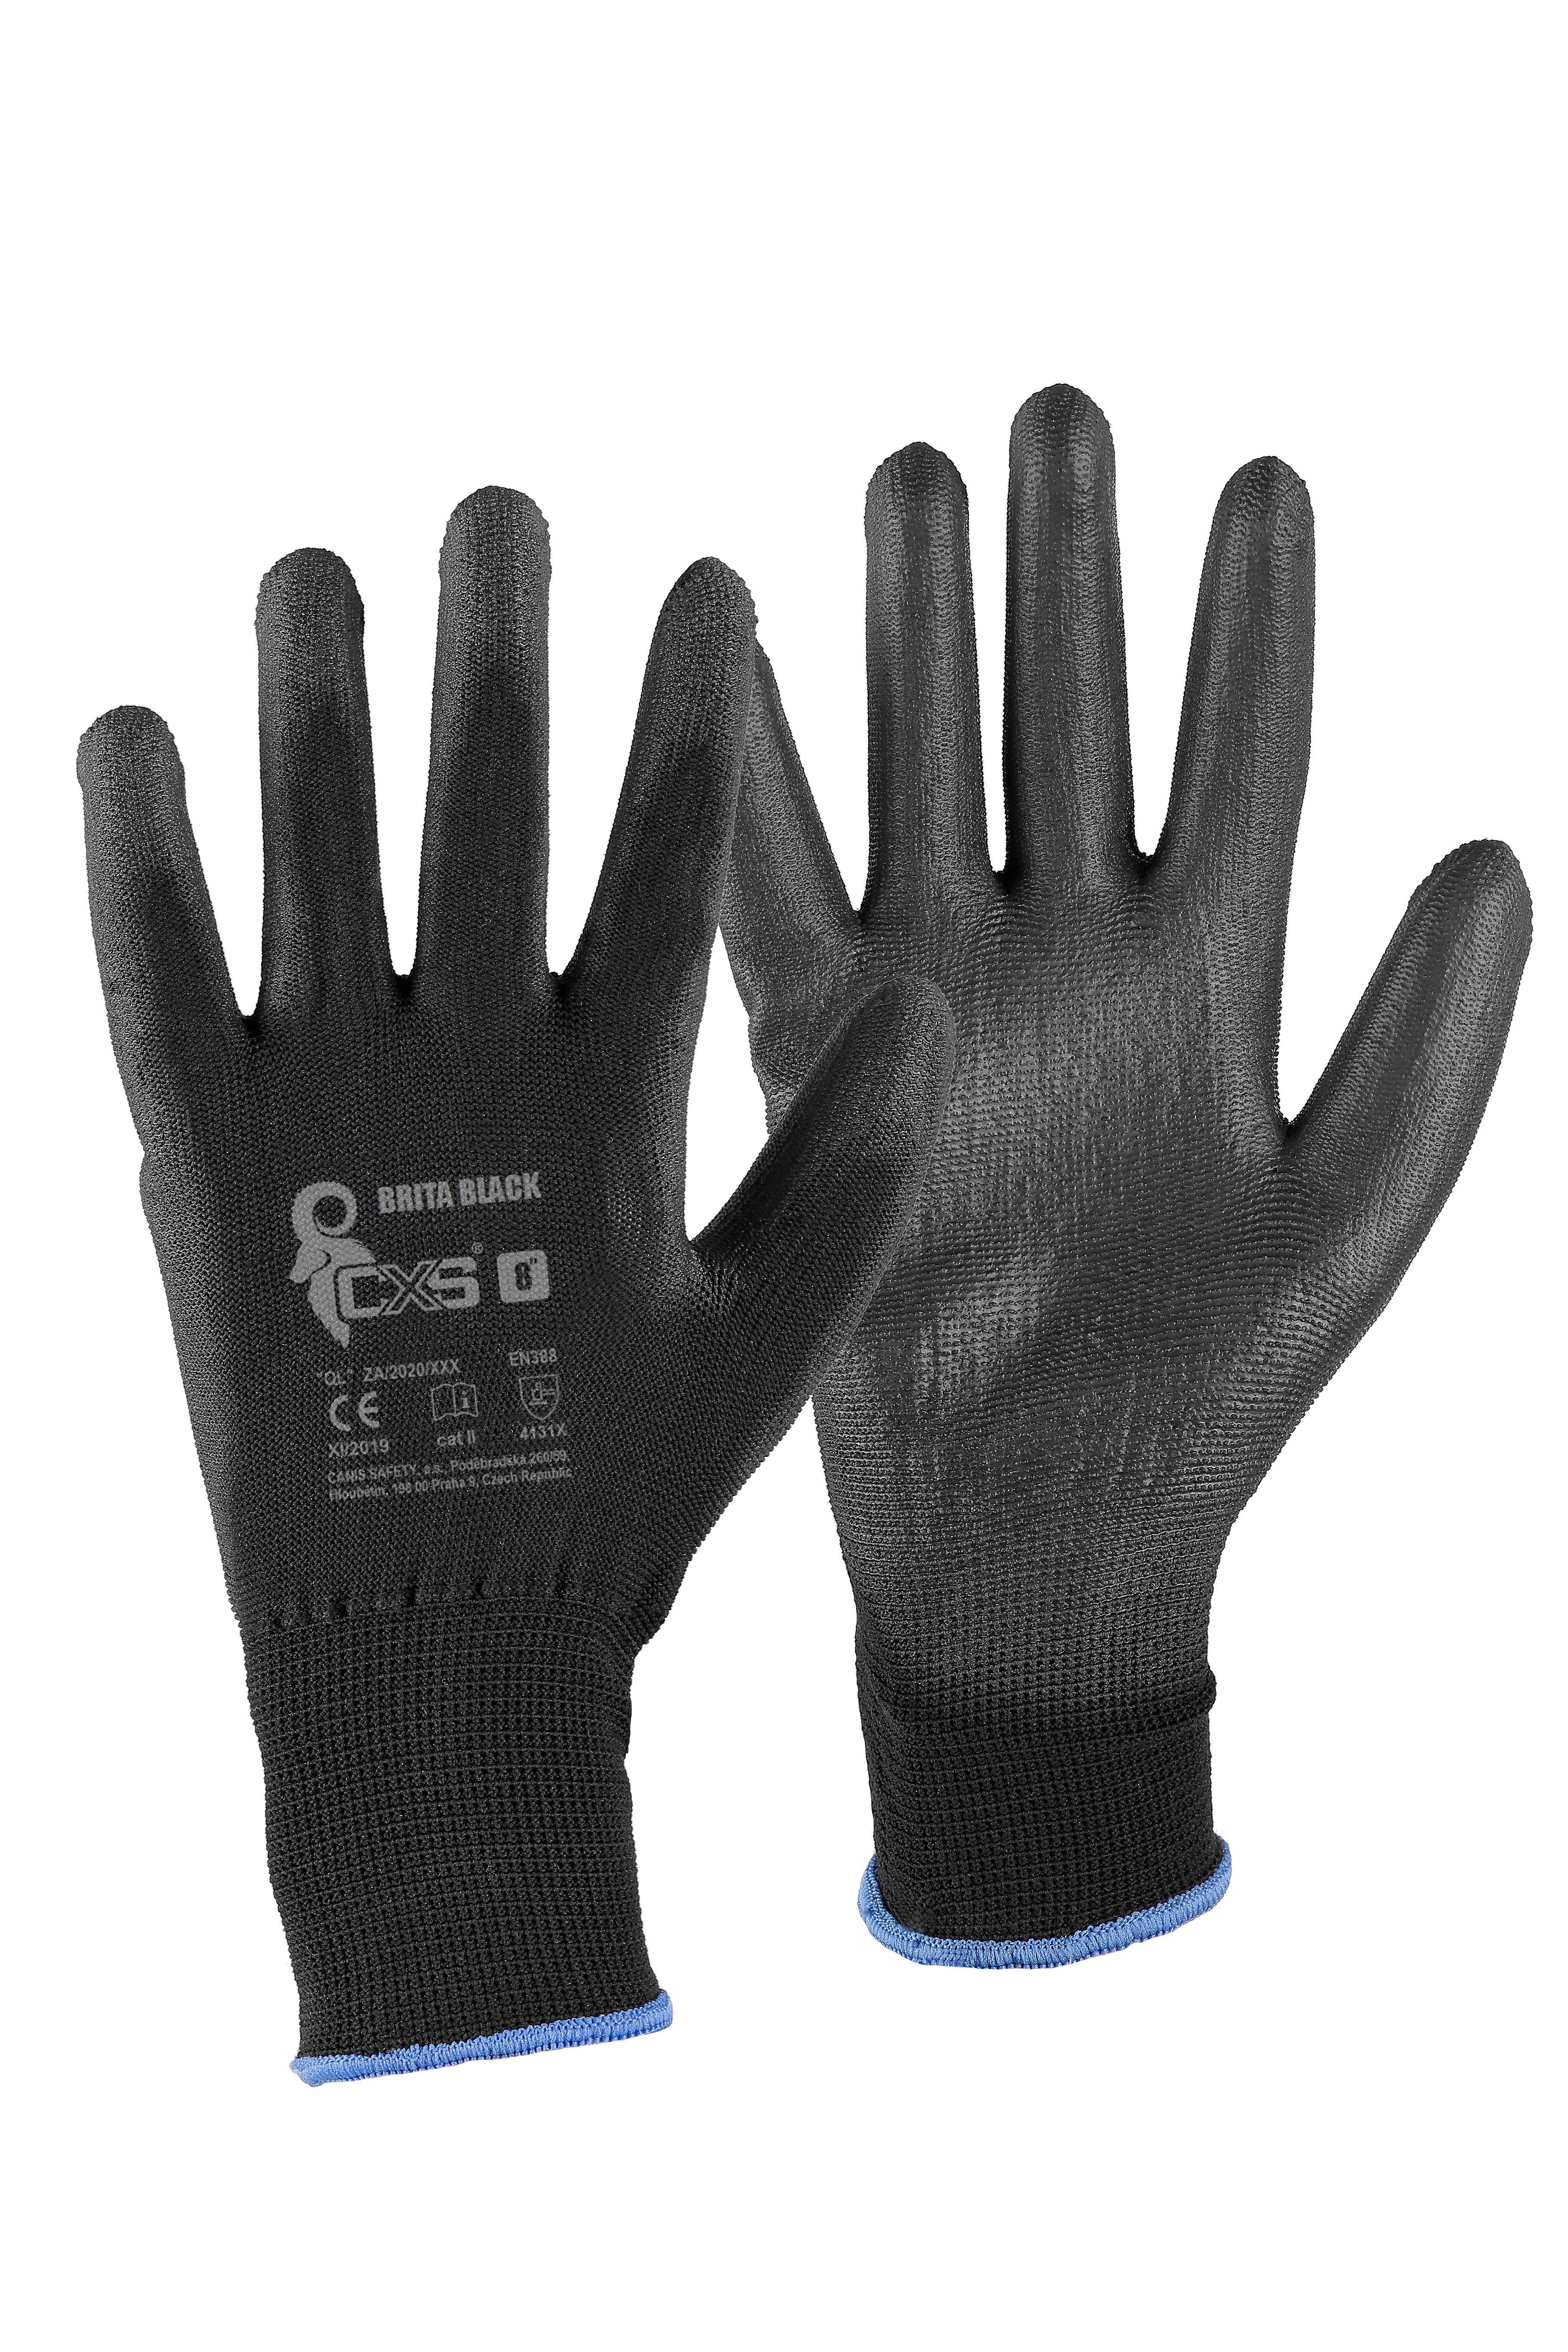 rukavice BRITA BLACK, s PU dlaní a úpletem, velikost 6 0.02 Kg TOP Sklad4 606045 264